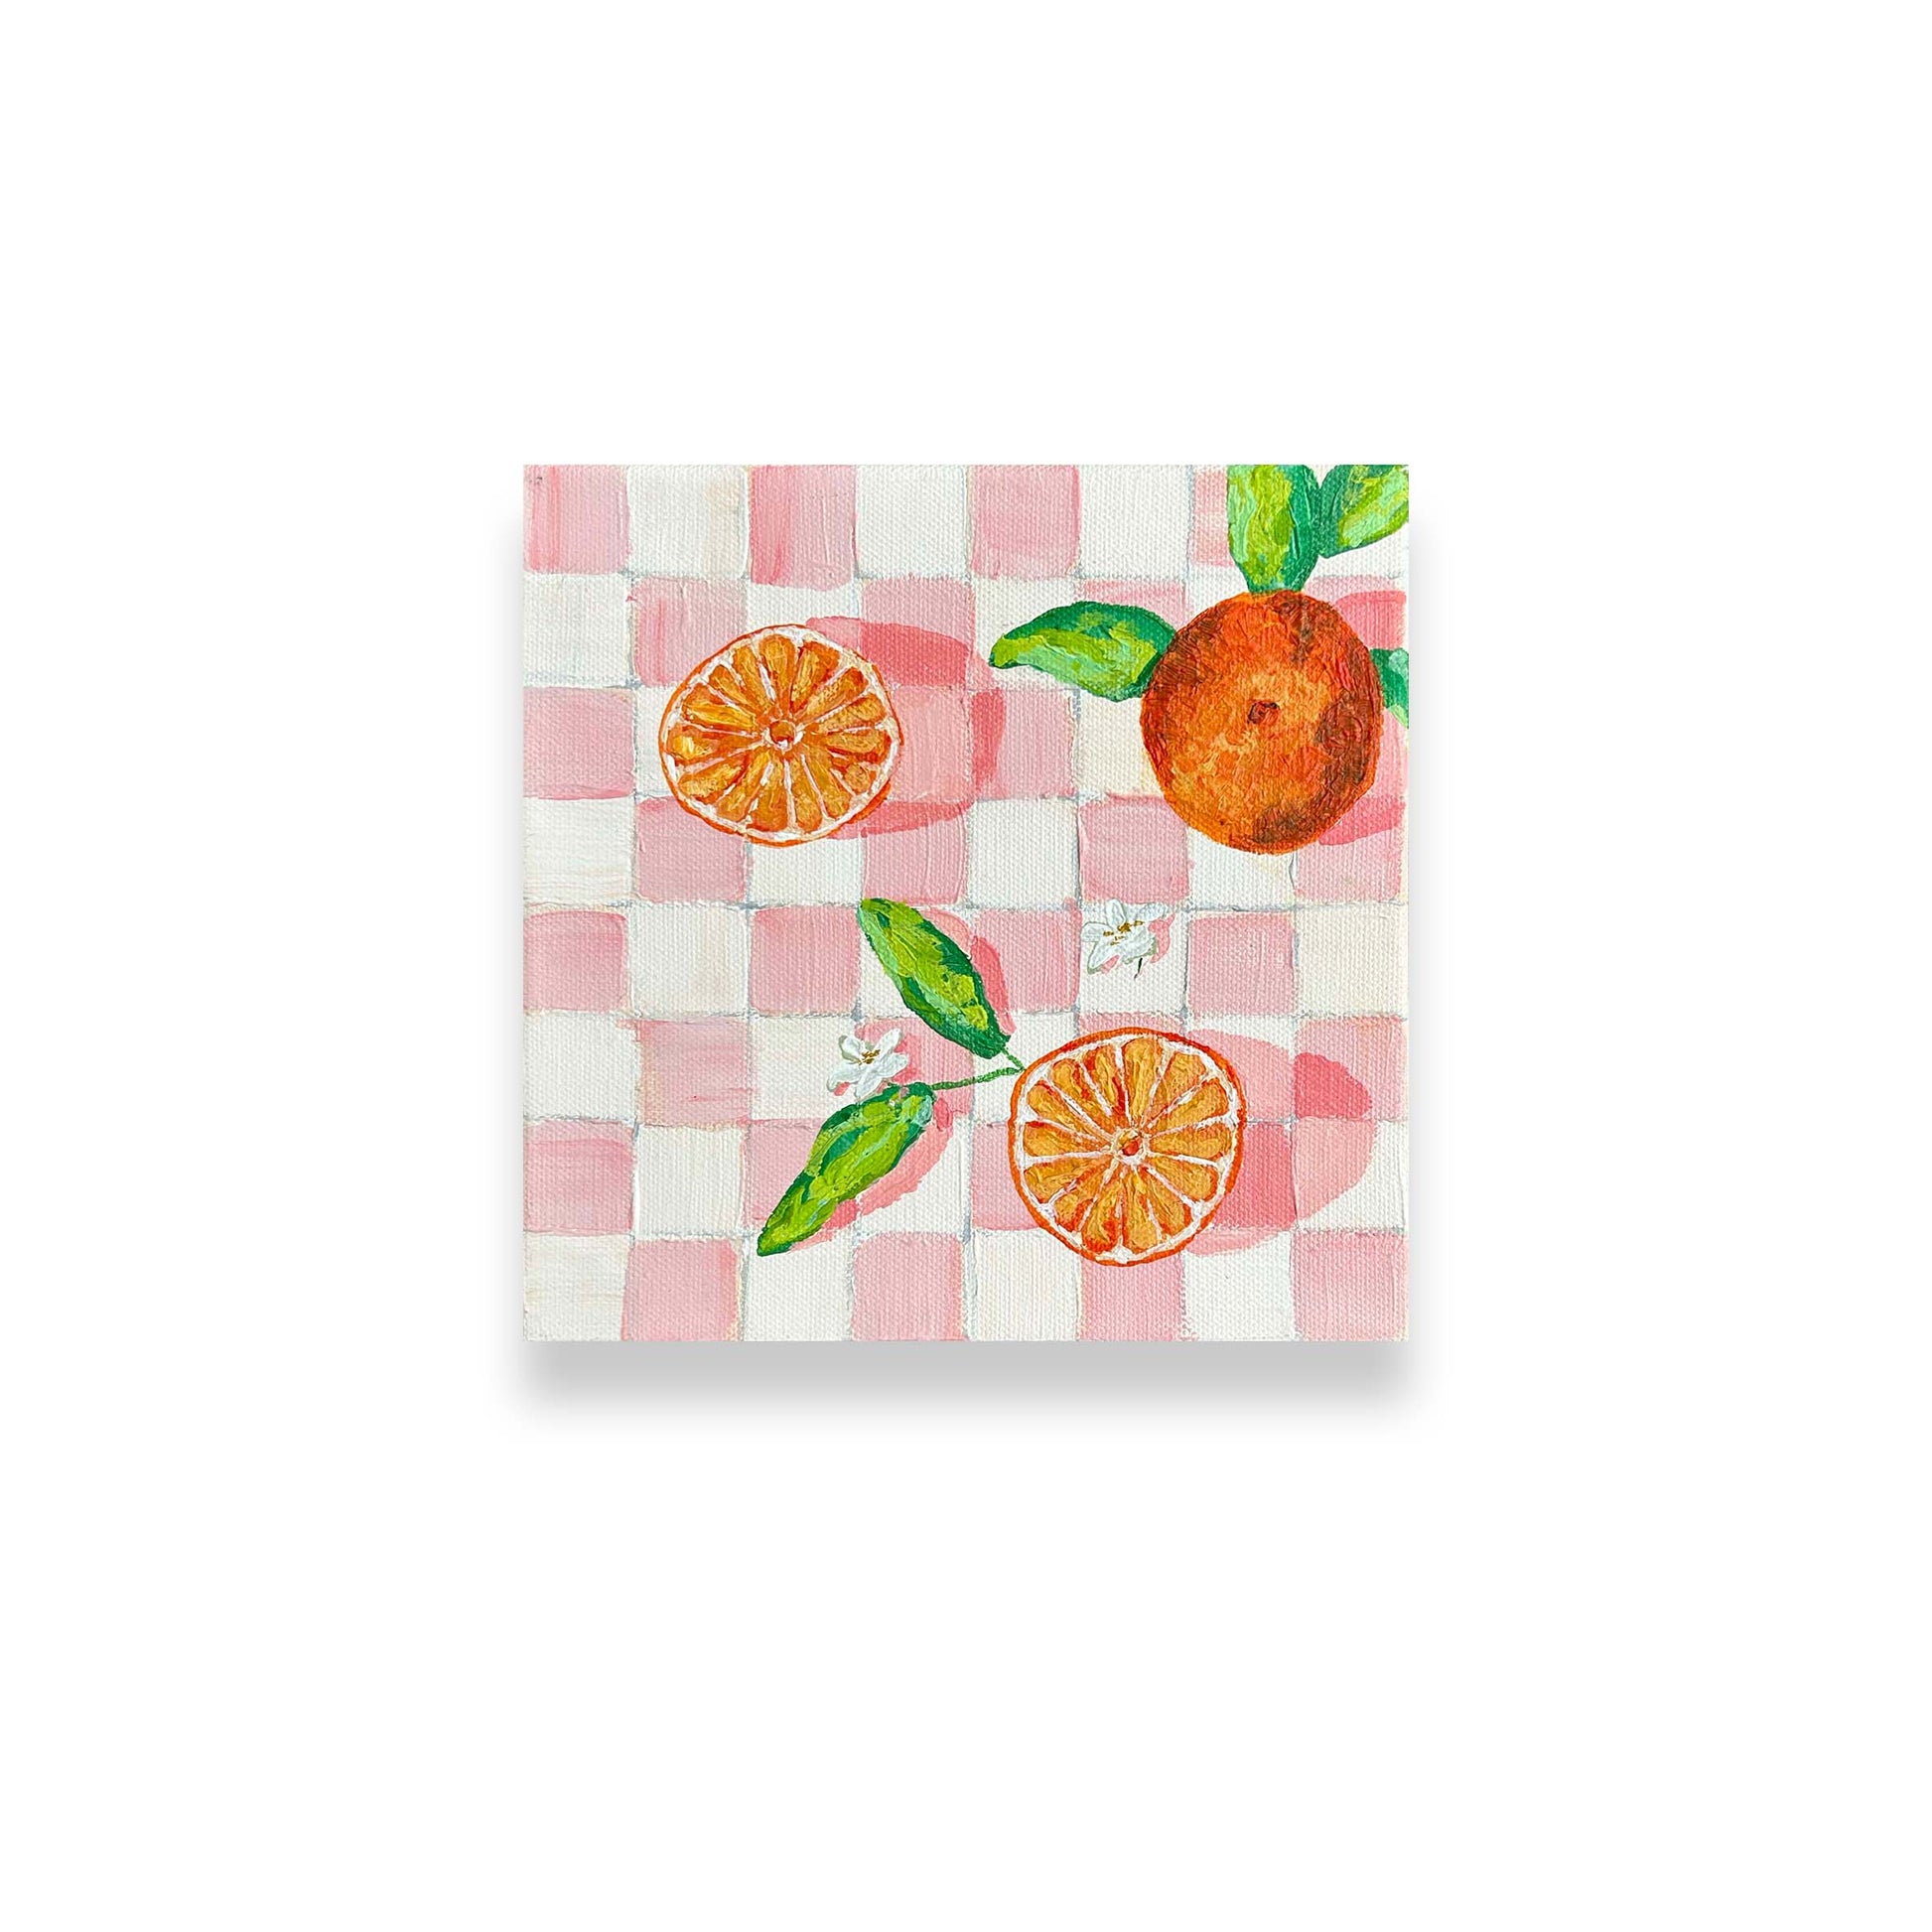 A Still Life Release-Citrus on Bubblegum